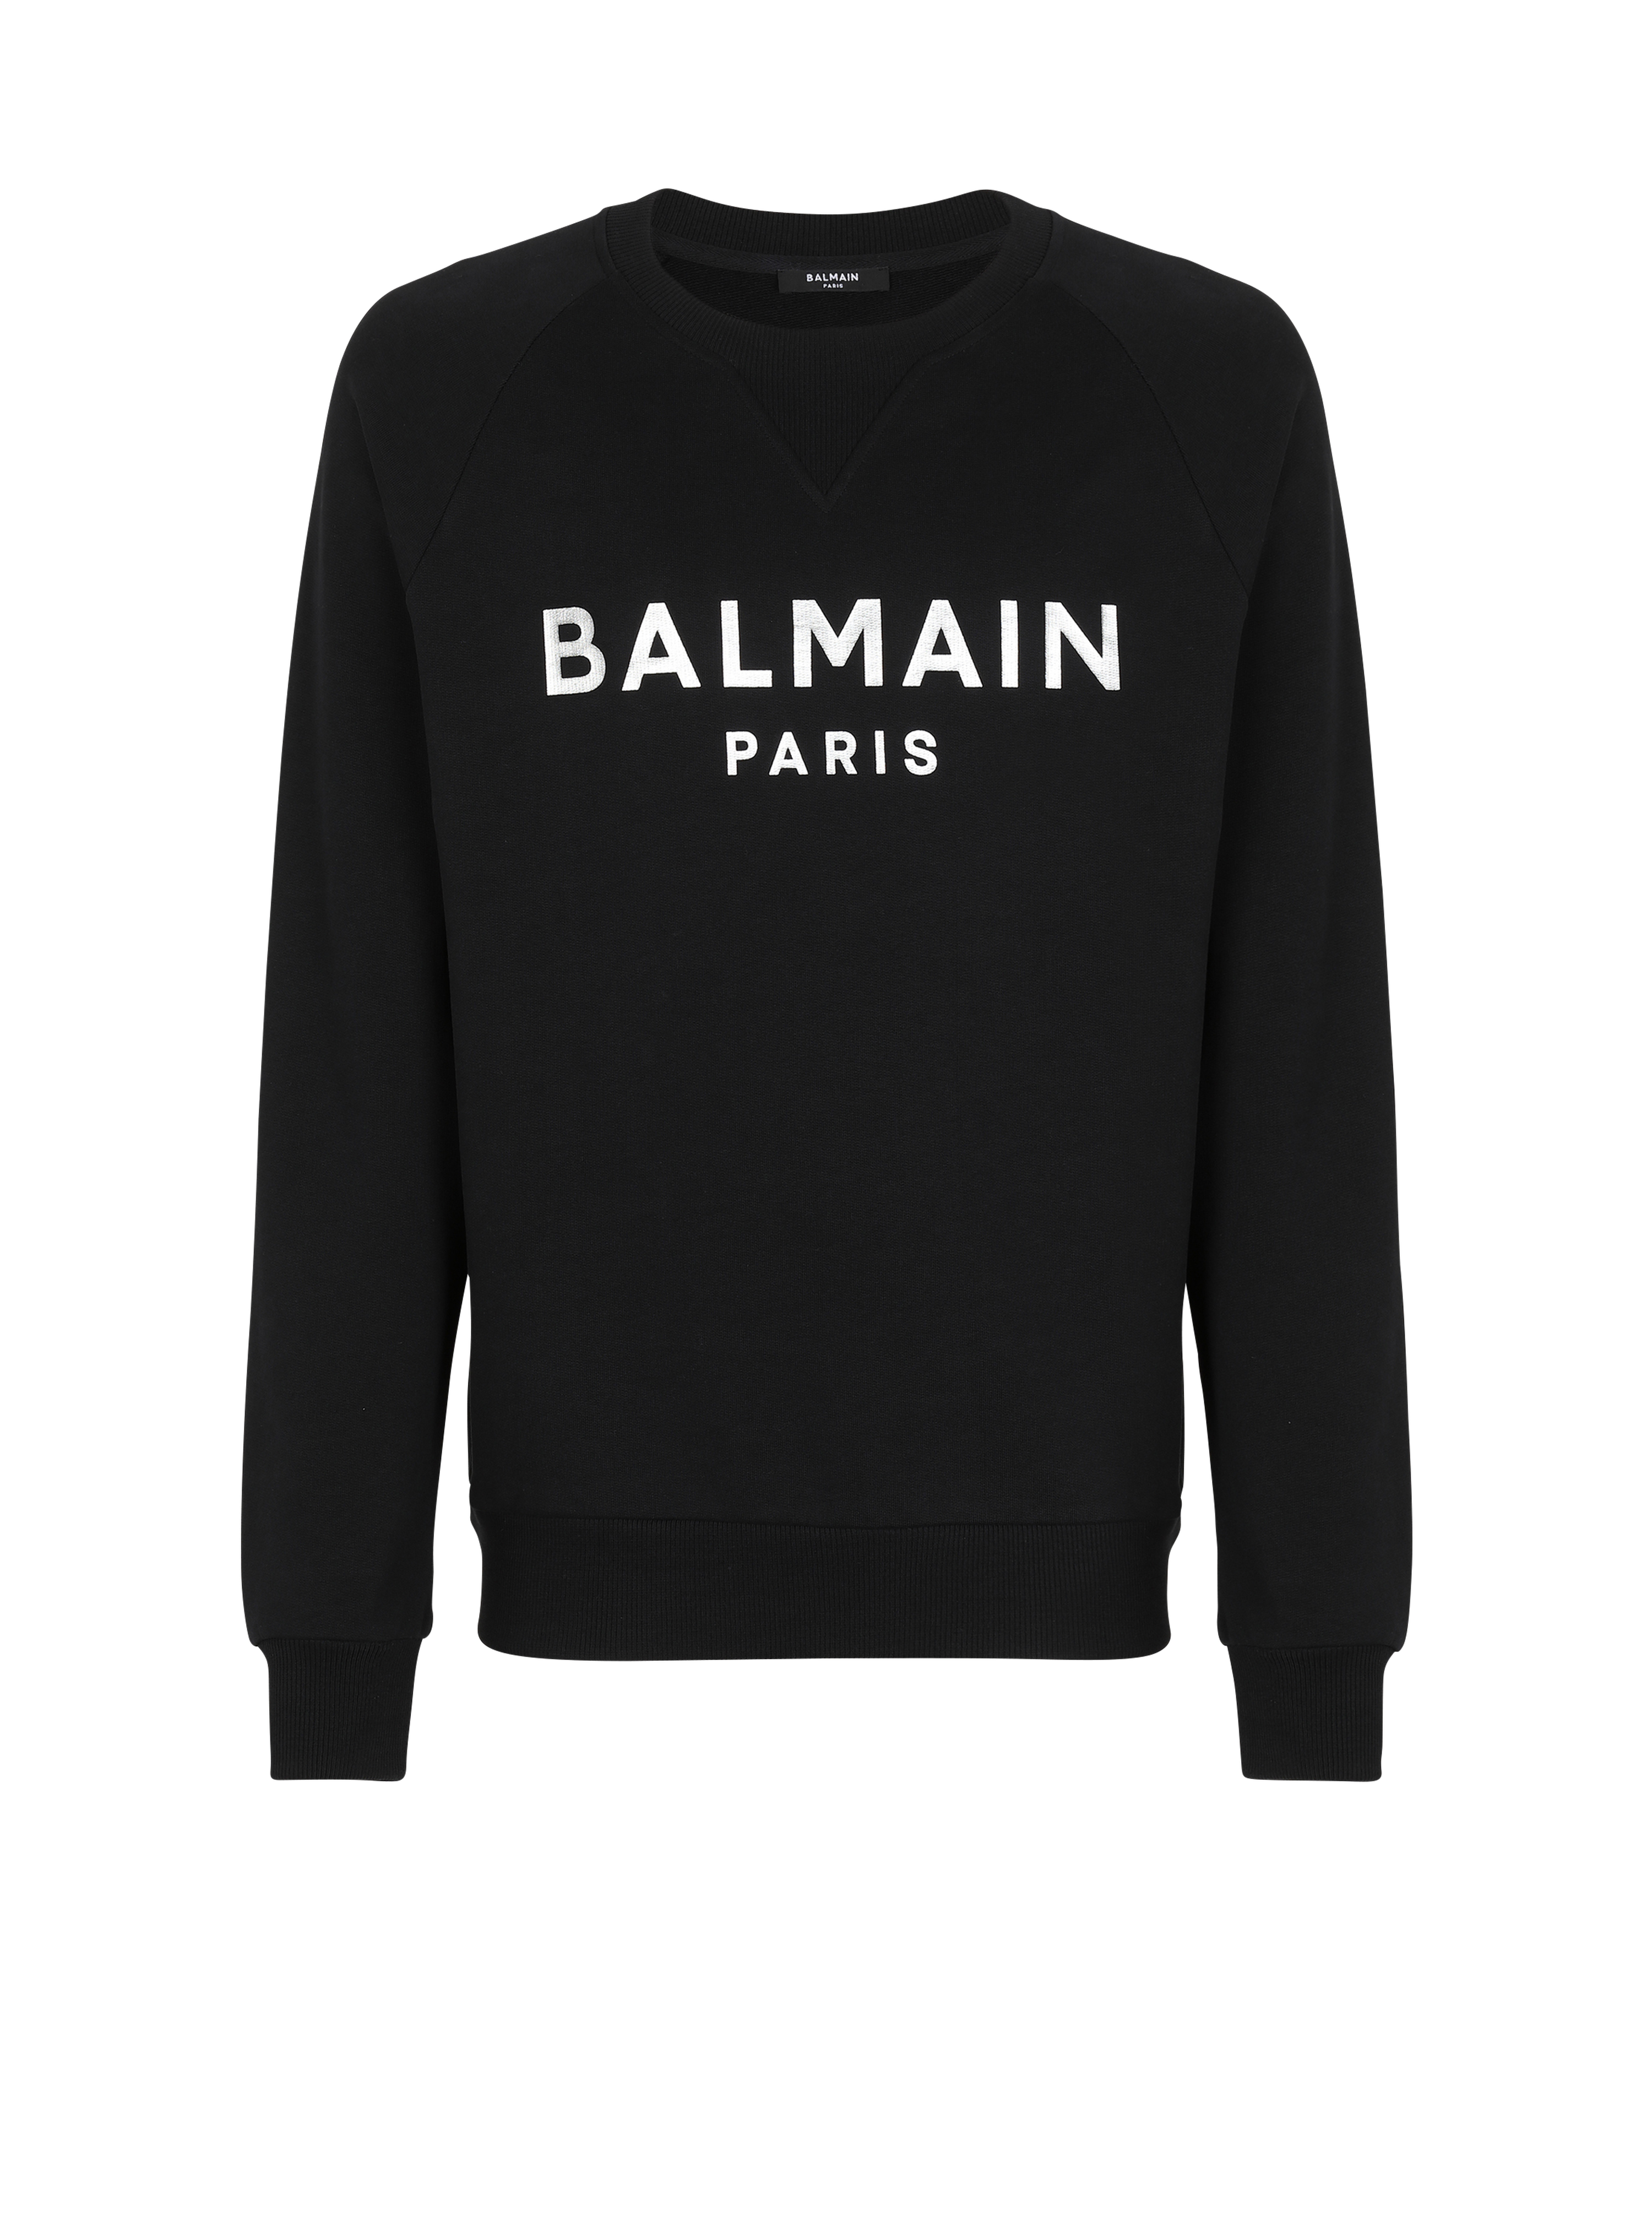 Sweat en coton éco-design imprimé logo Balmain, noir